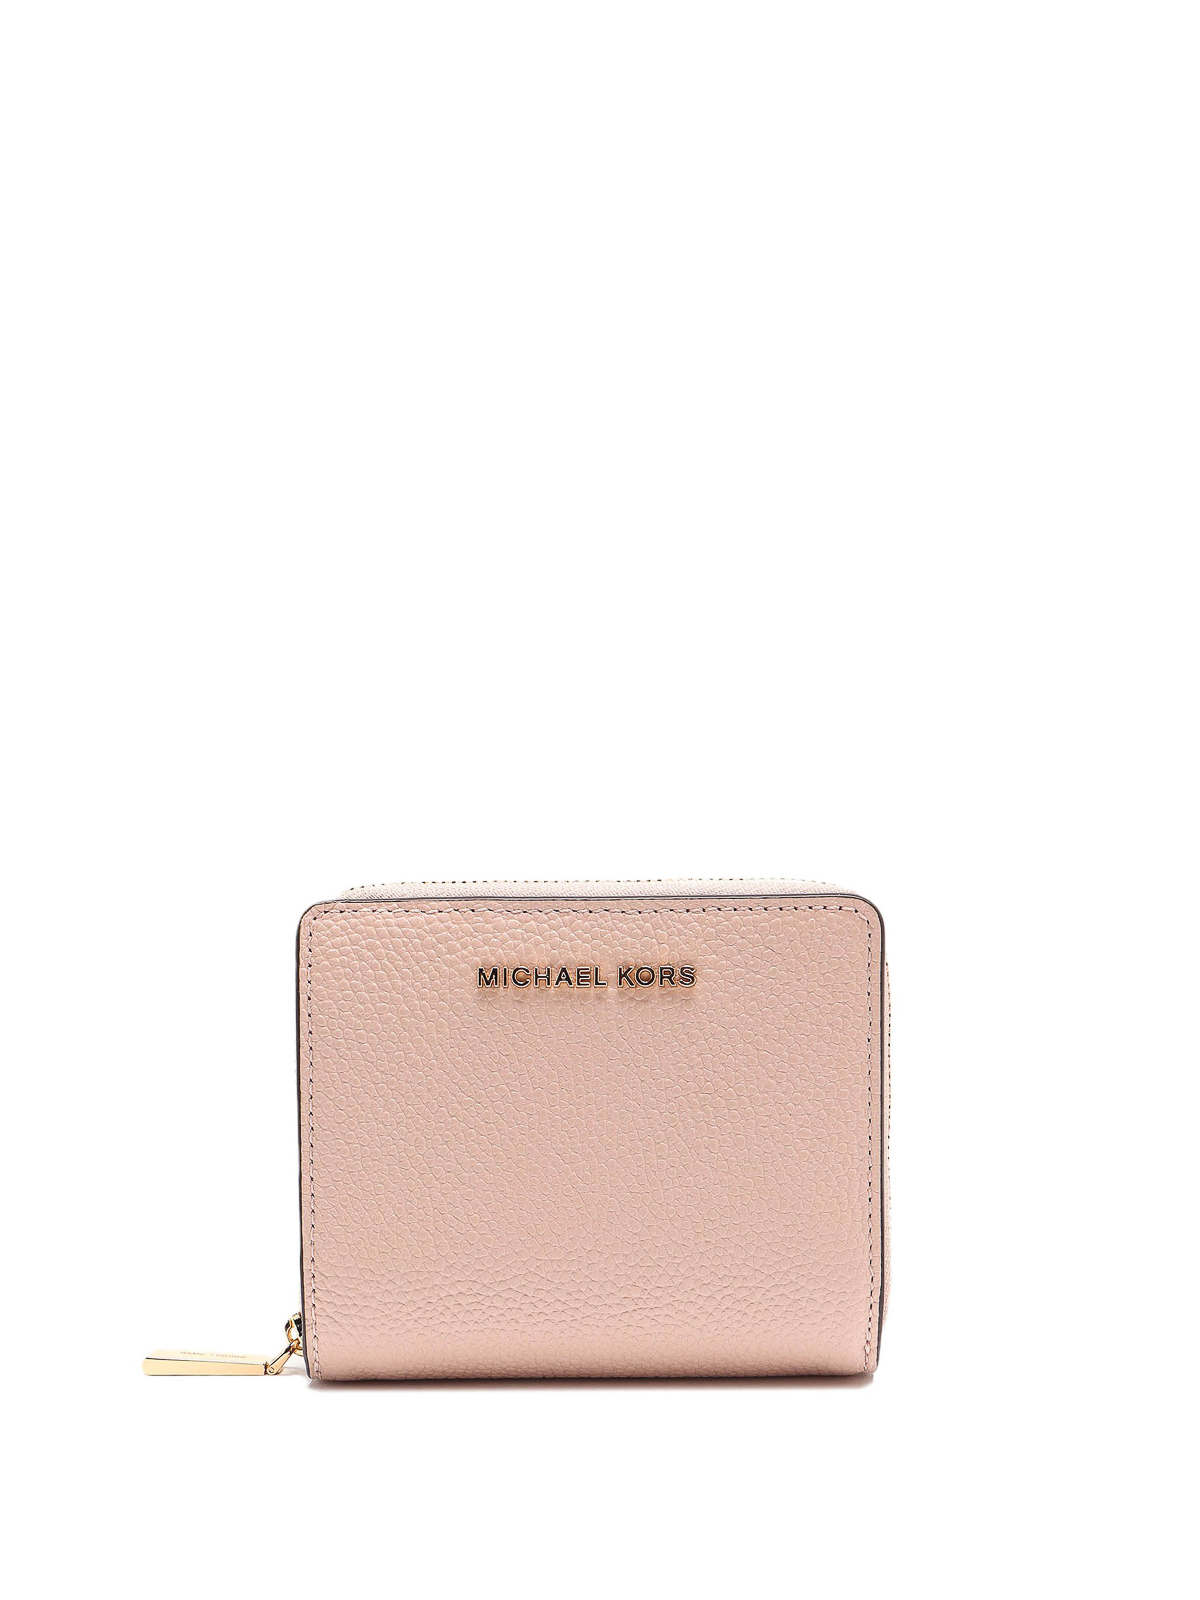 Michael Kors pink large zip up walletwristlet inglesefecom